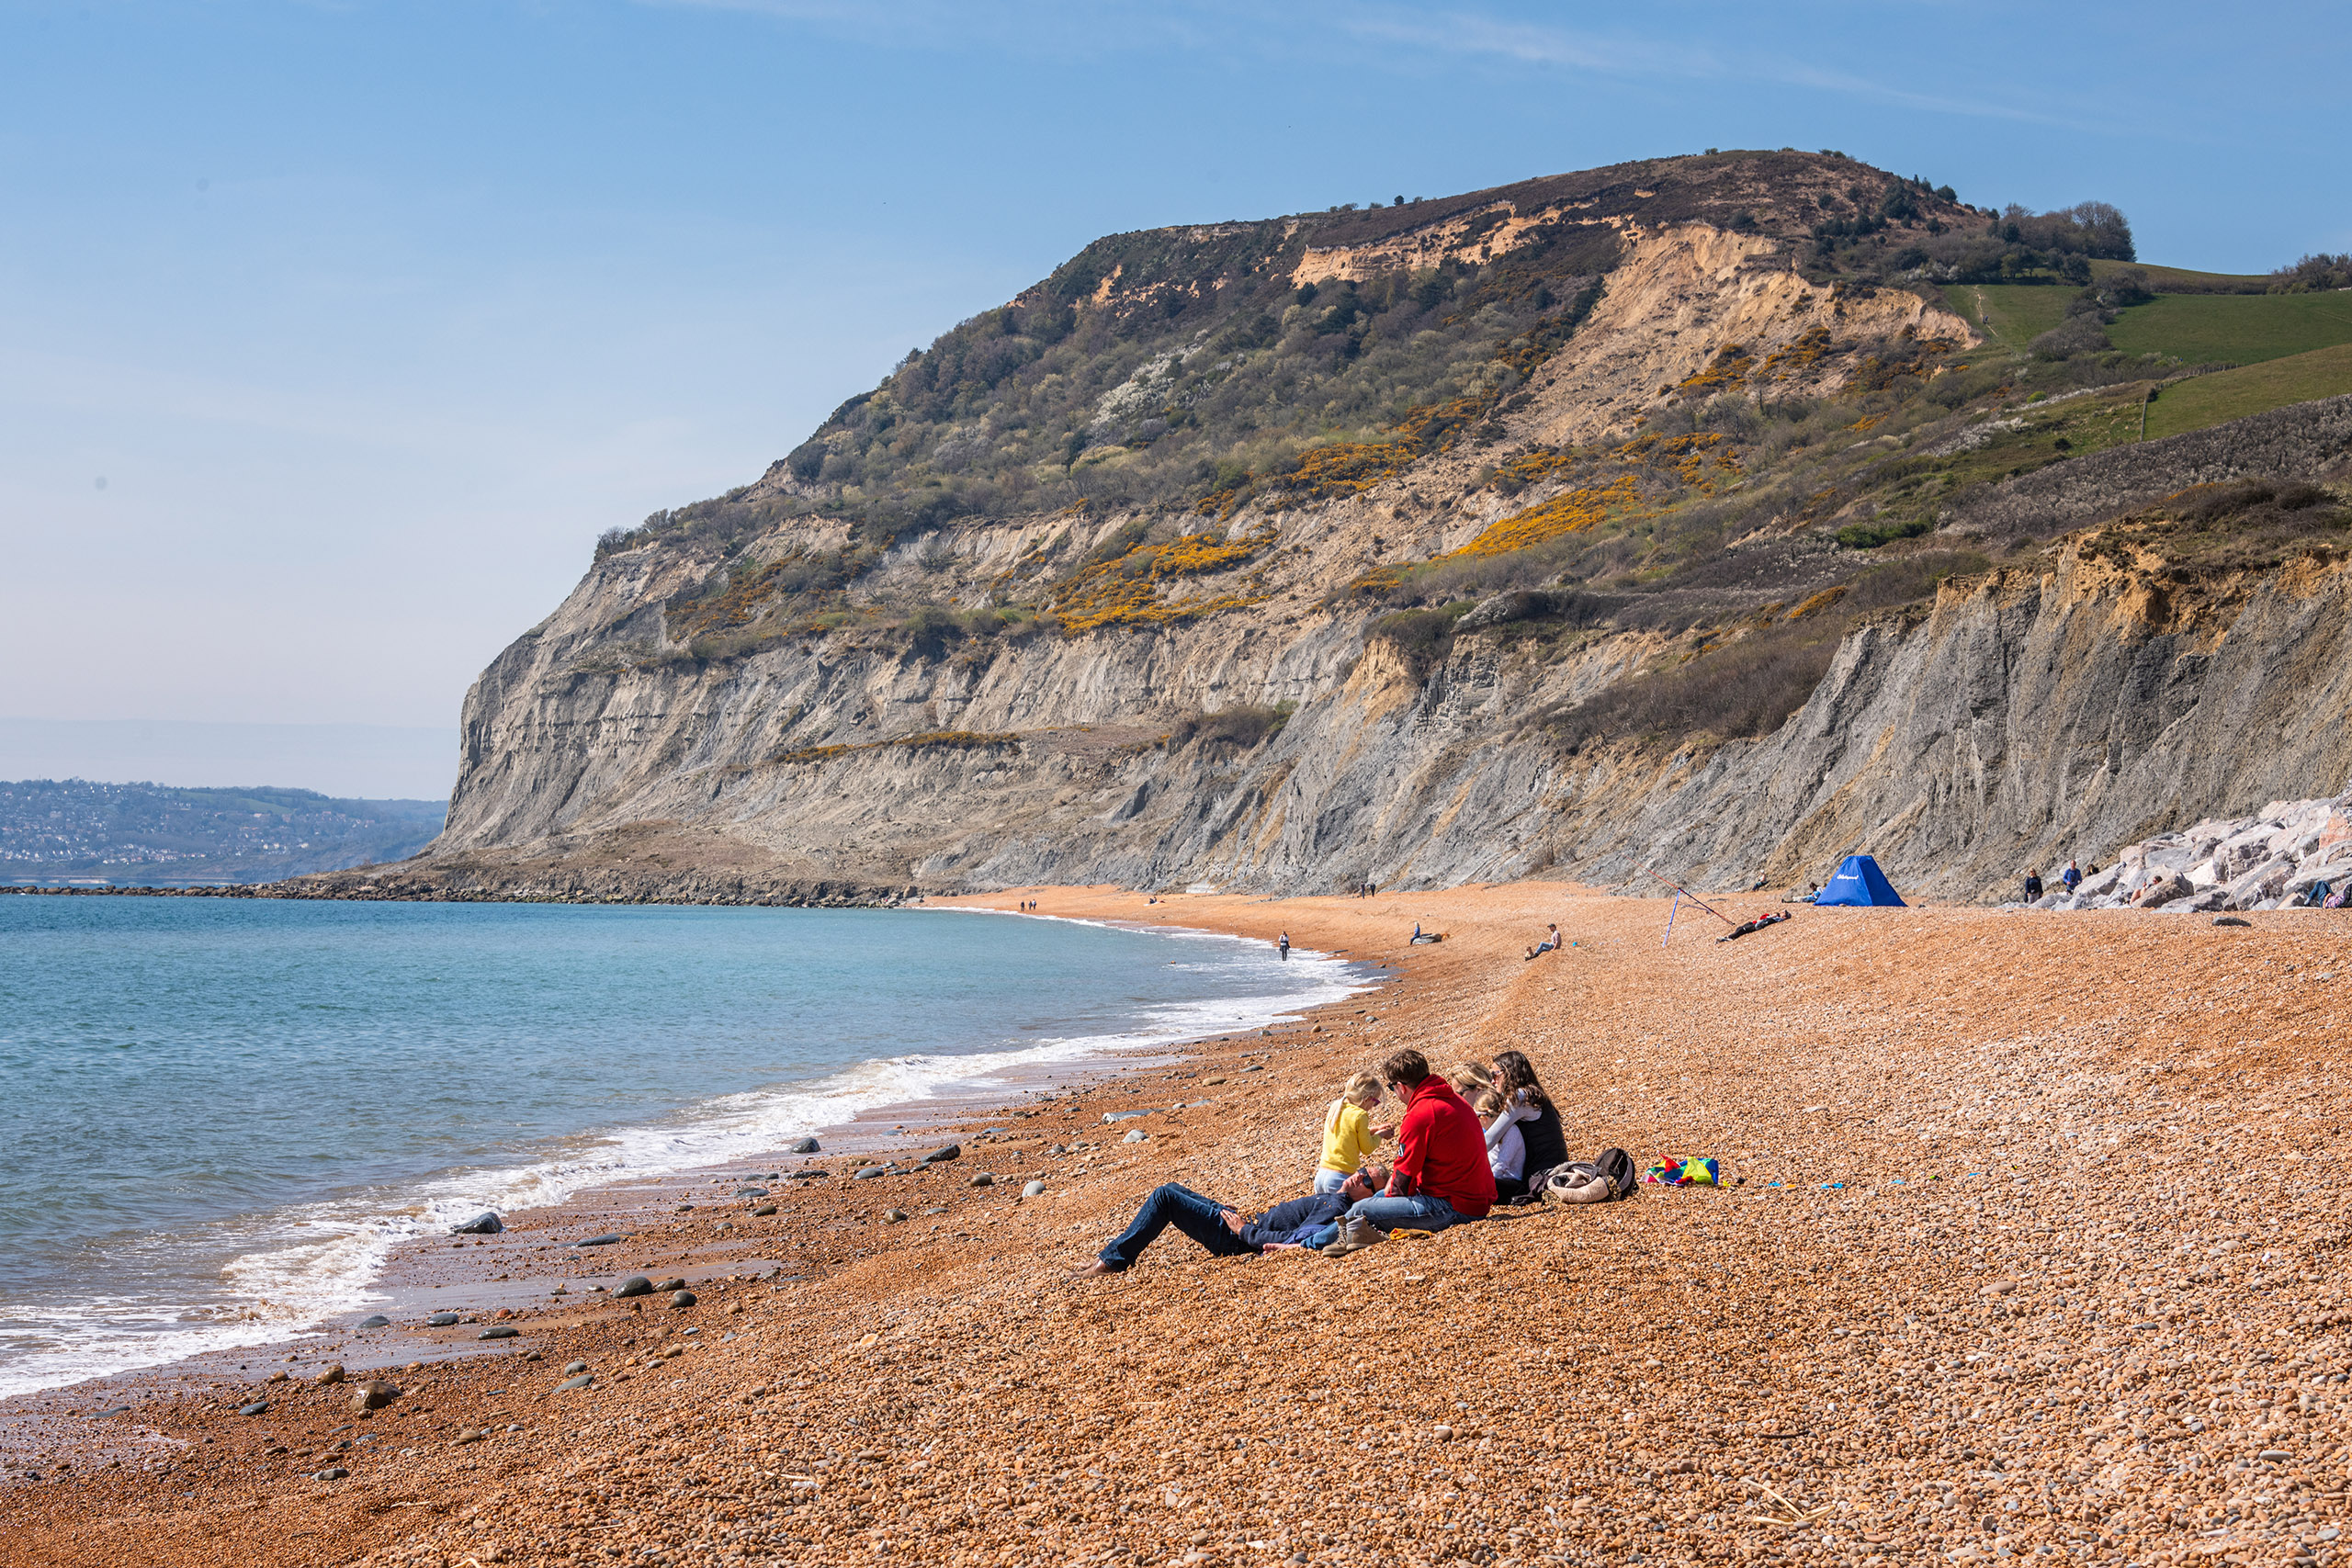 West Dorset Leisure Holidays